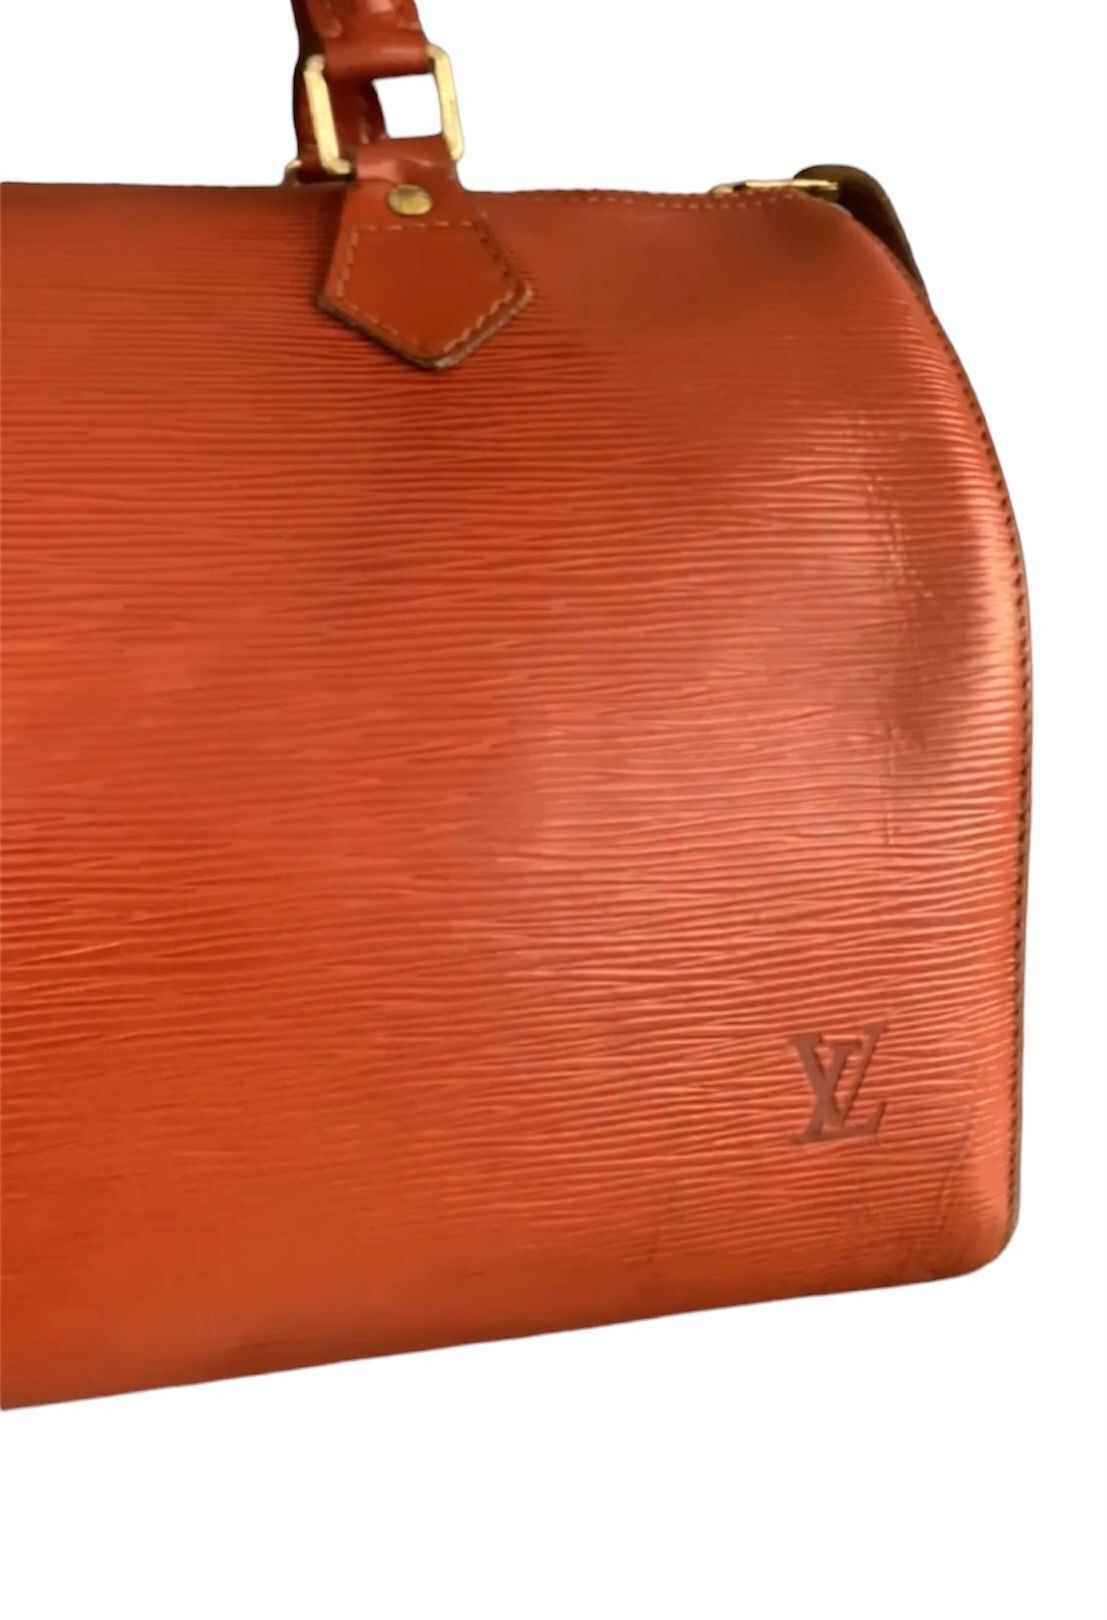 Louis Vuitton Speedy Kenya 30 868137 Brown Epi Leather Satchel, Louis  Vuitton